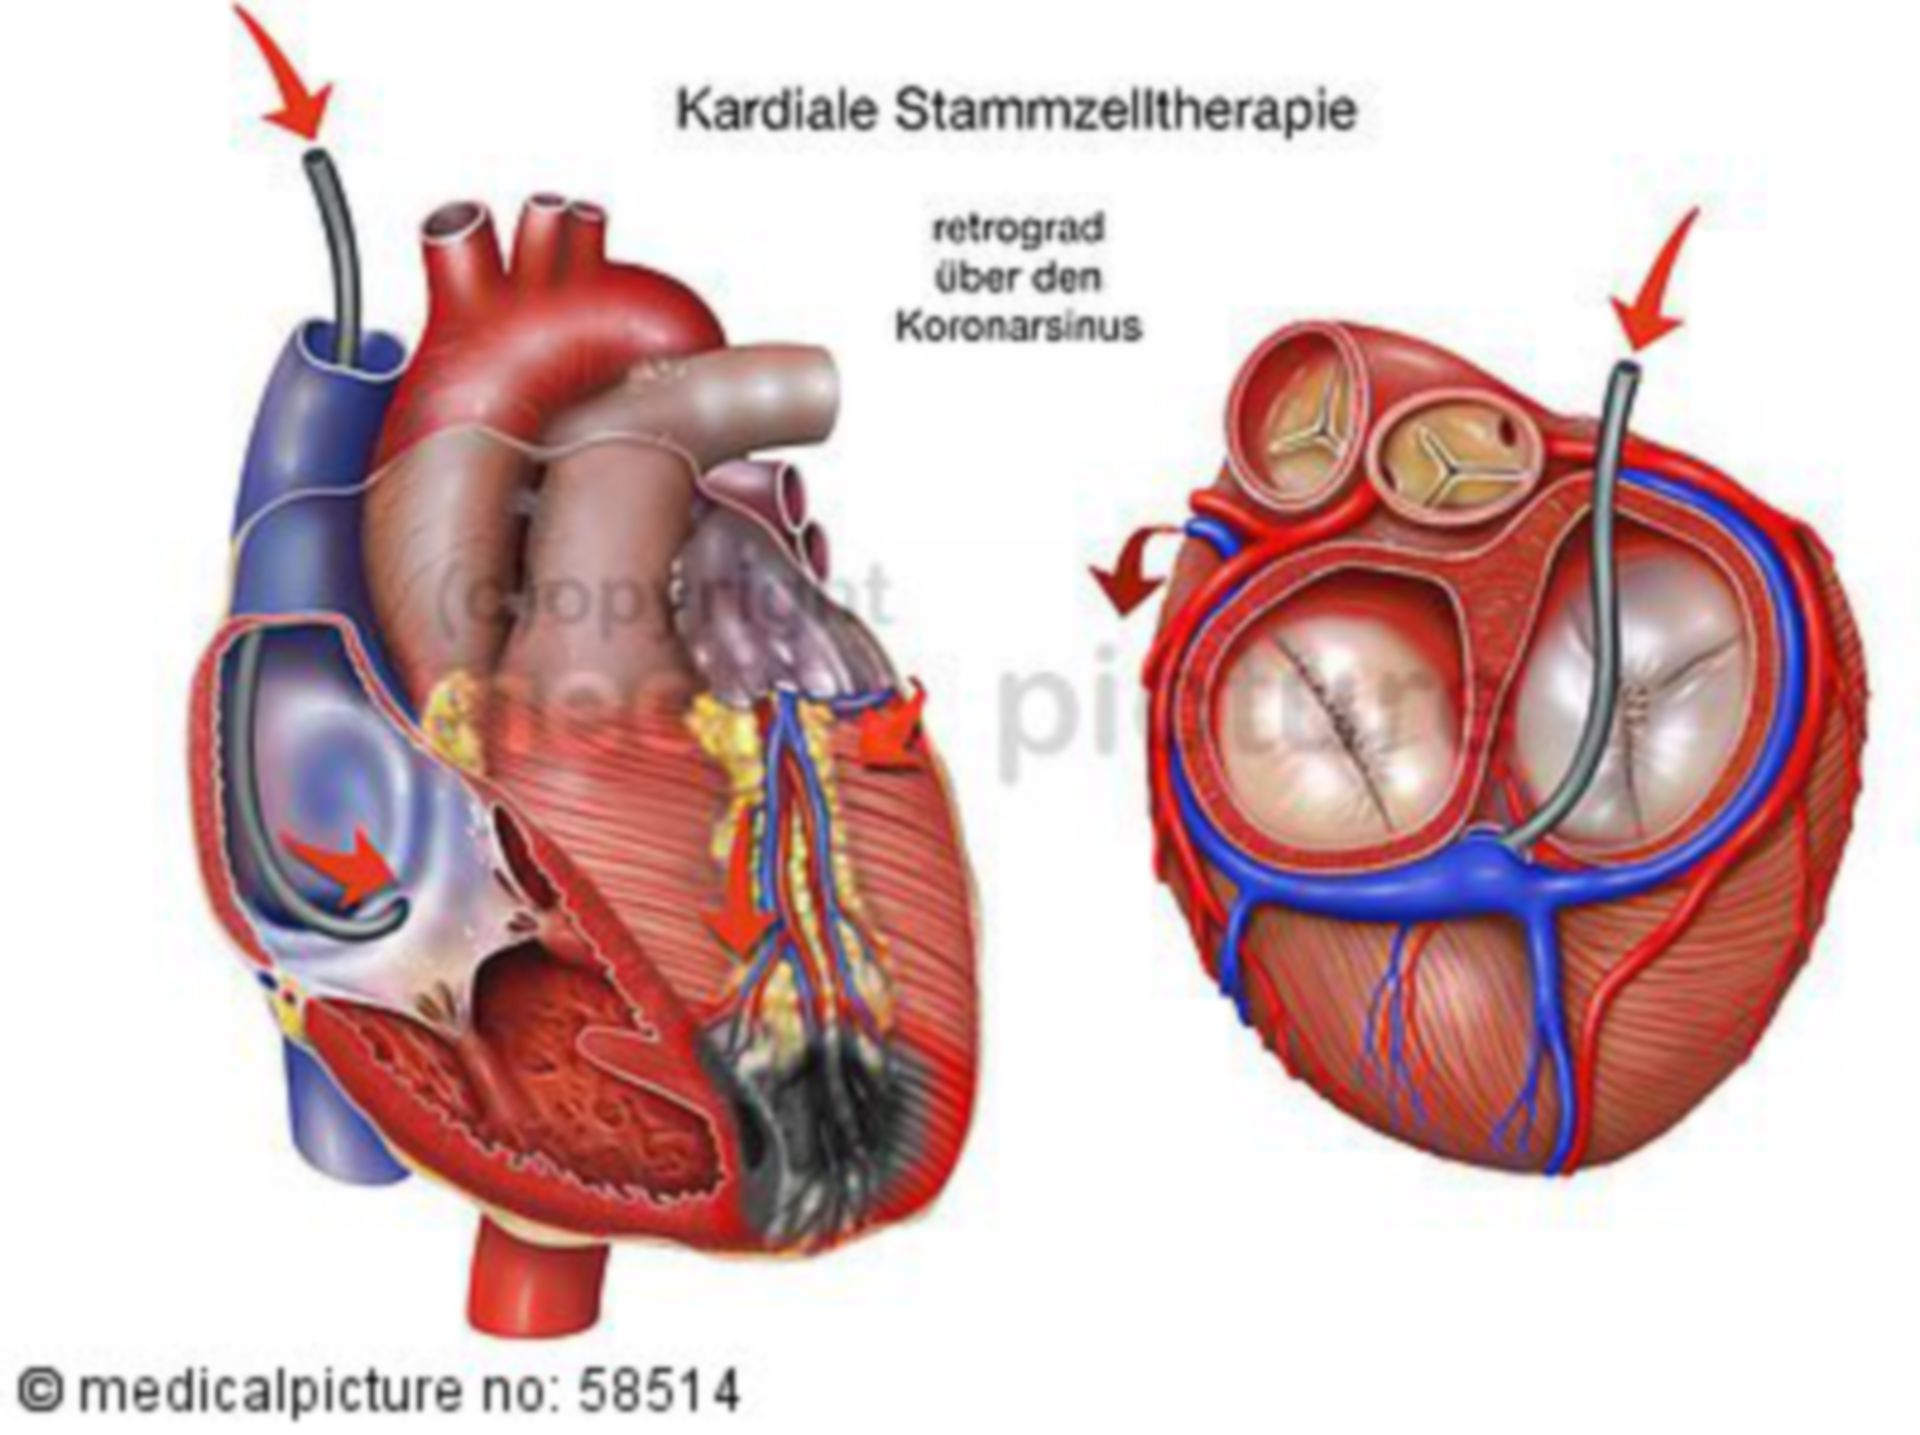 Cardiac stem cell therapy